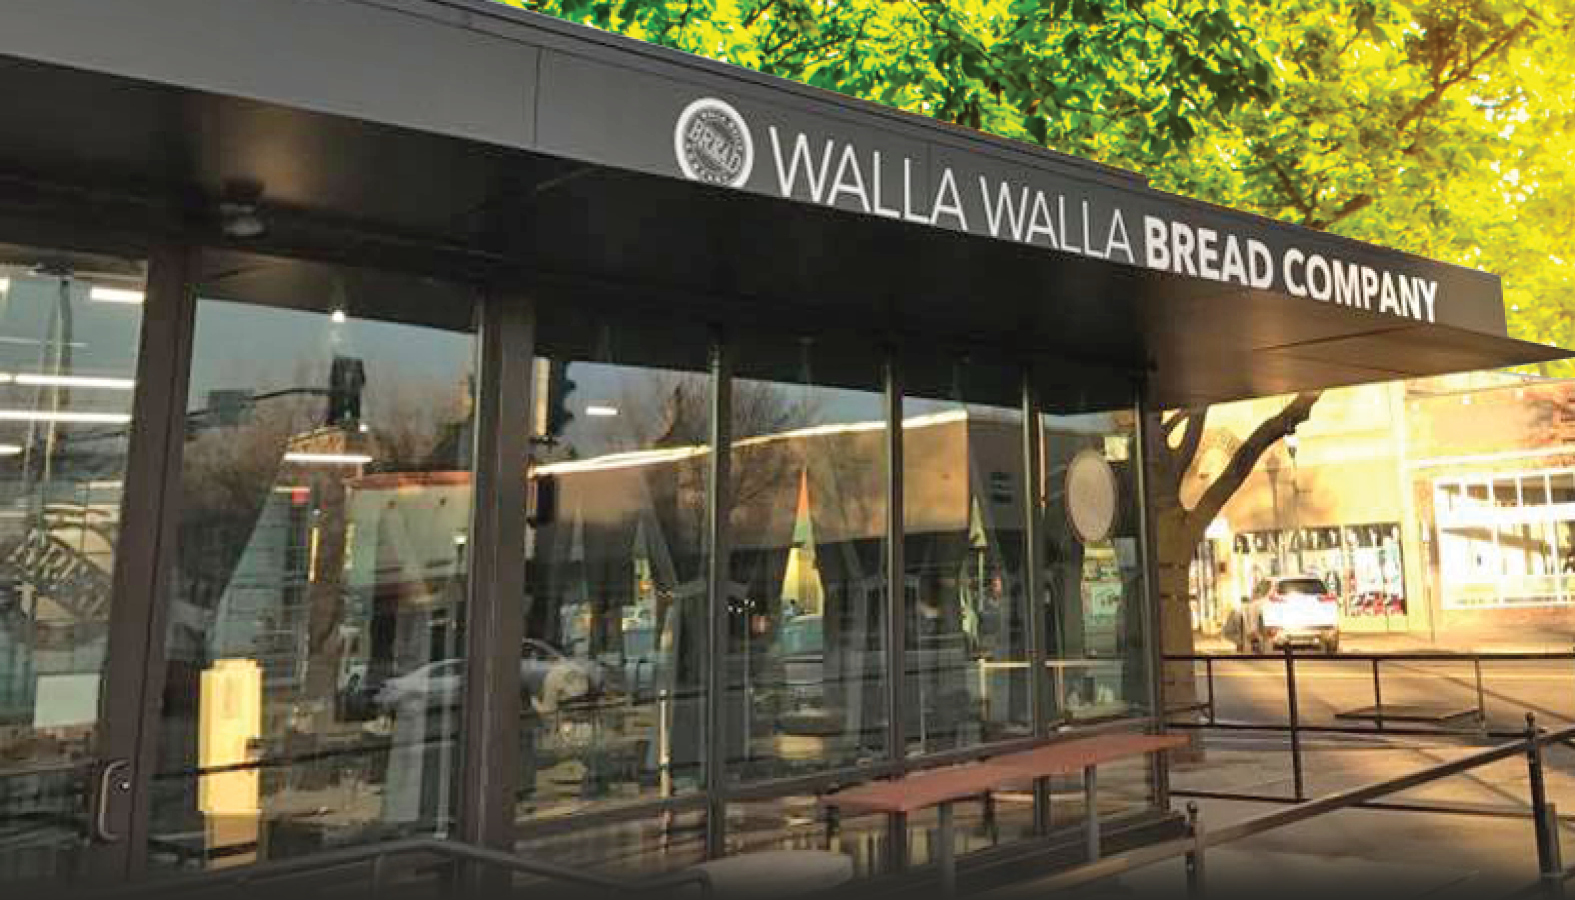 Walla Walla Bread Company